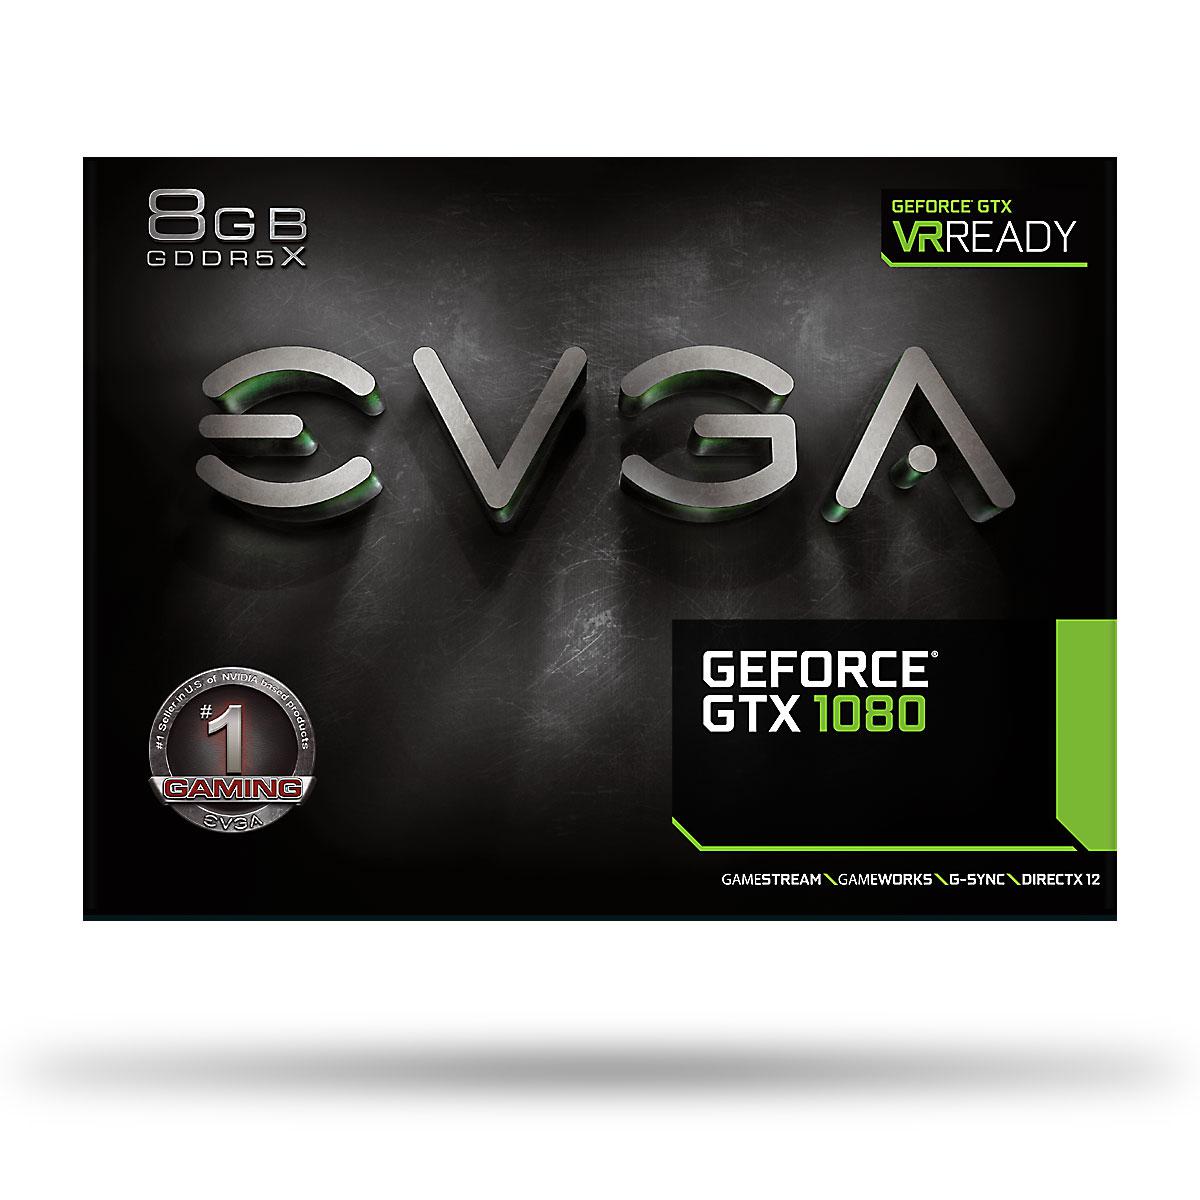 EVGA GeForce GTX 1080 8 GB GeForce 1000 Series